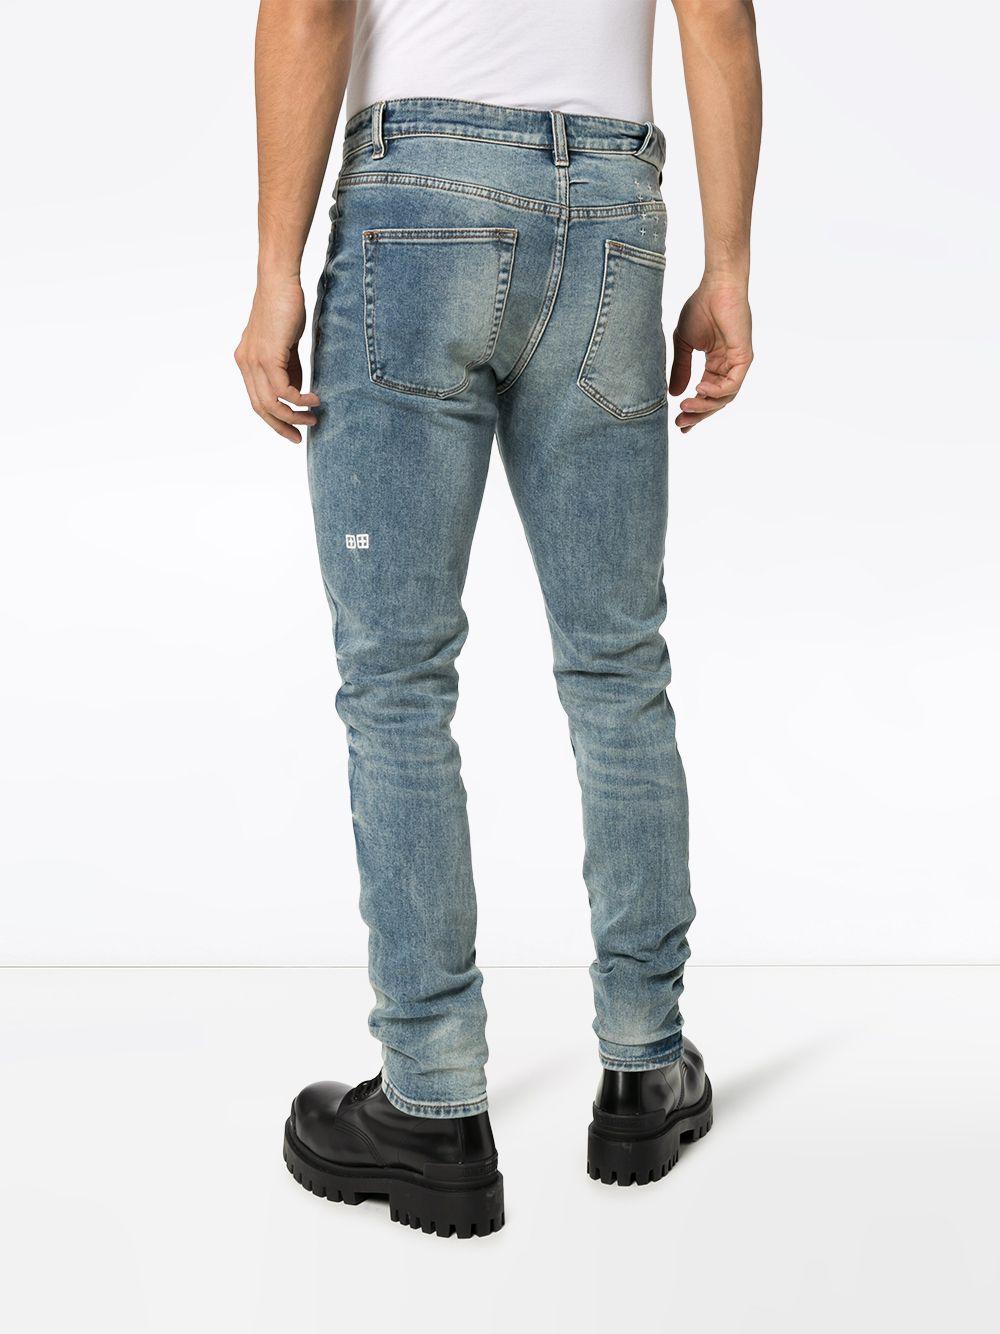 Ksubi Denim Chitch Slim-fit Jeans in Blue for Men - Lyst